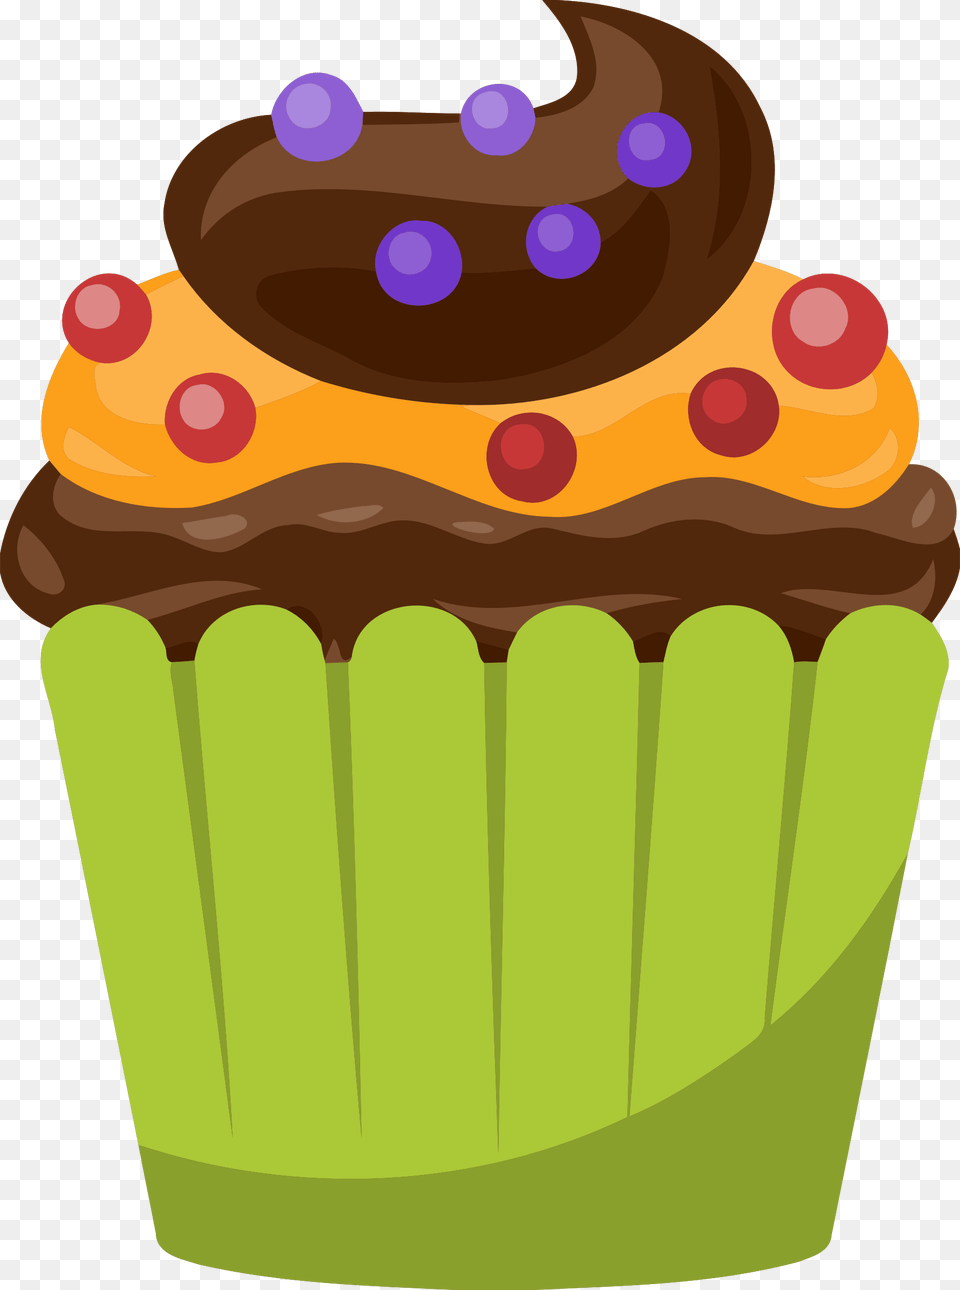 This Icons Design Of Cake, Cream, Cupcake, Dessert, Food Png Image